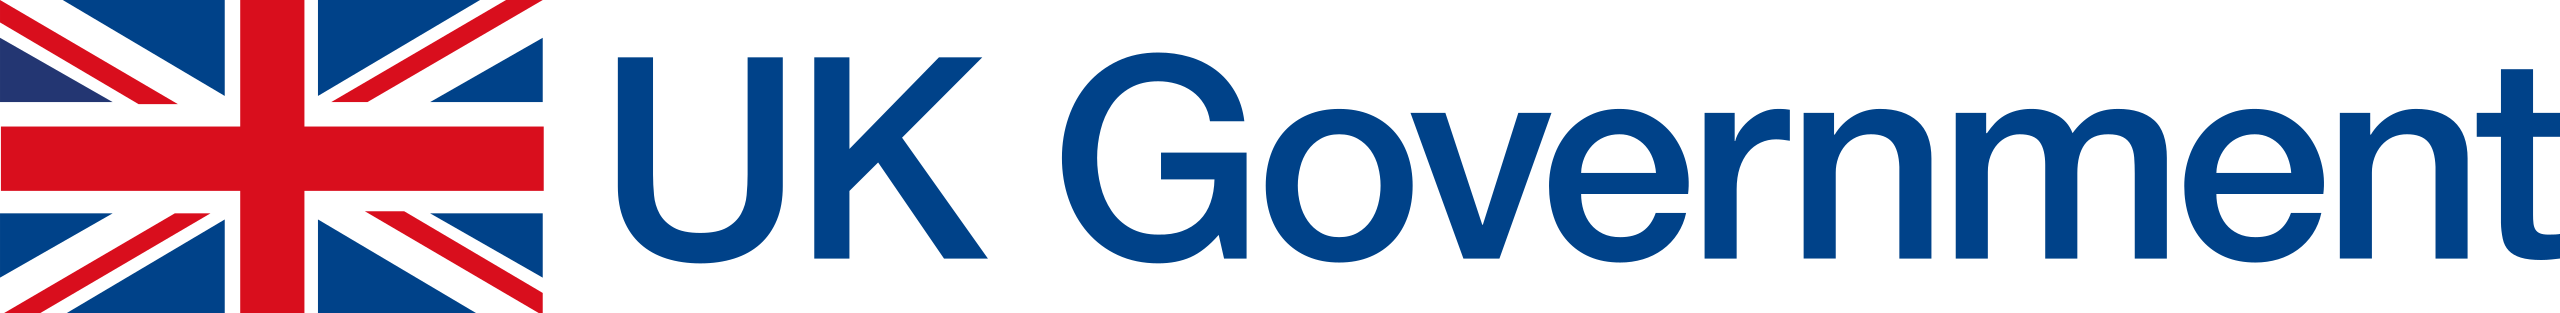 logo uk government